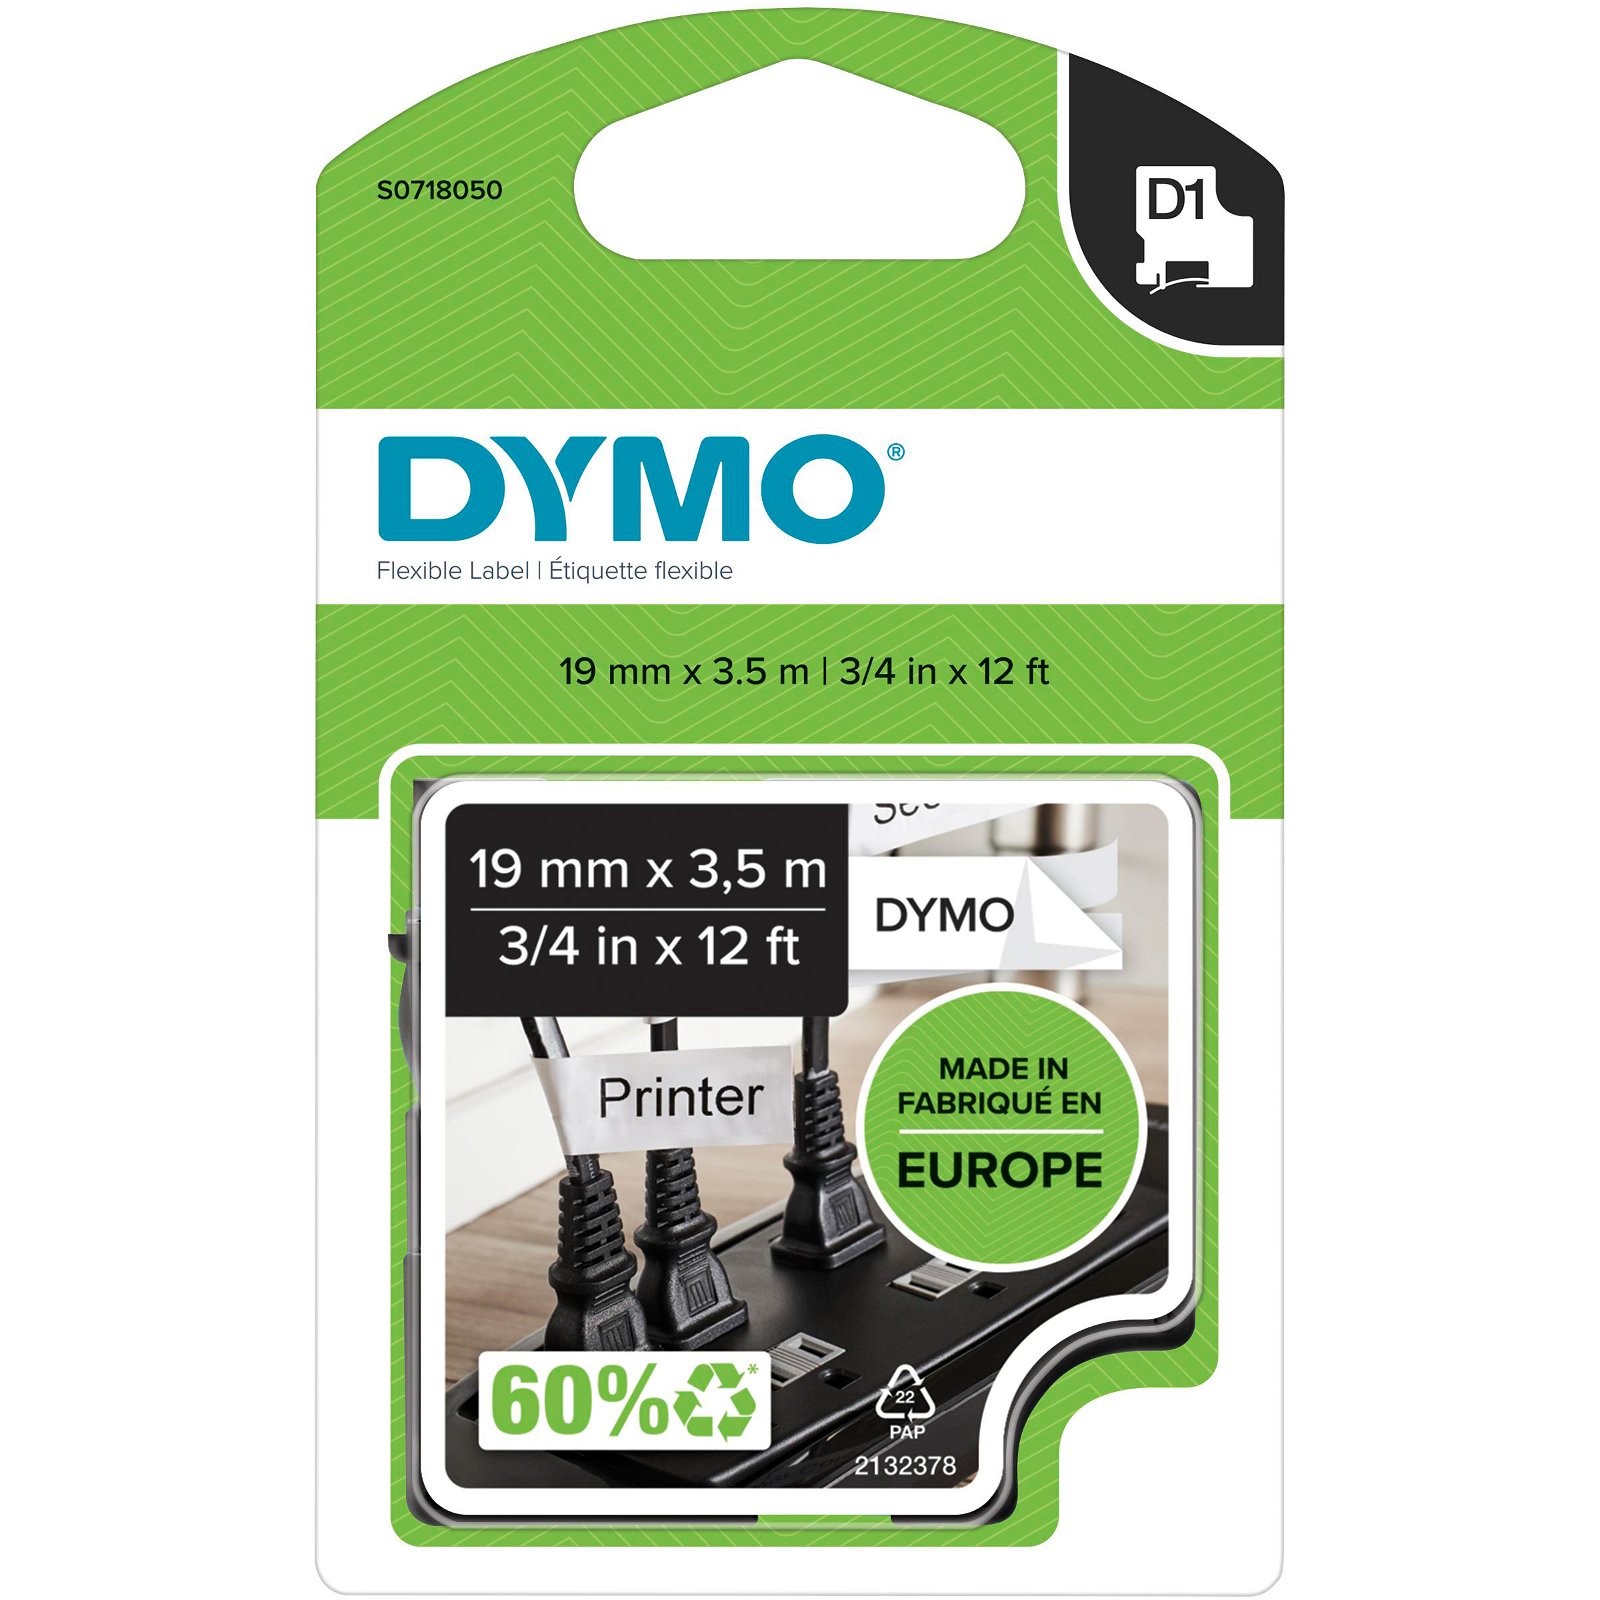 Dymo D1 Durable polyester tape S0718050 sort;hvid 19 mm x 3.5 m